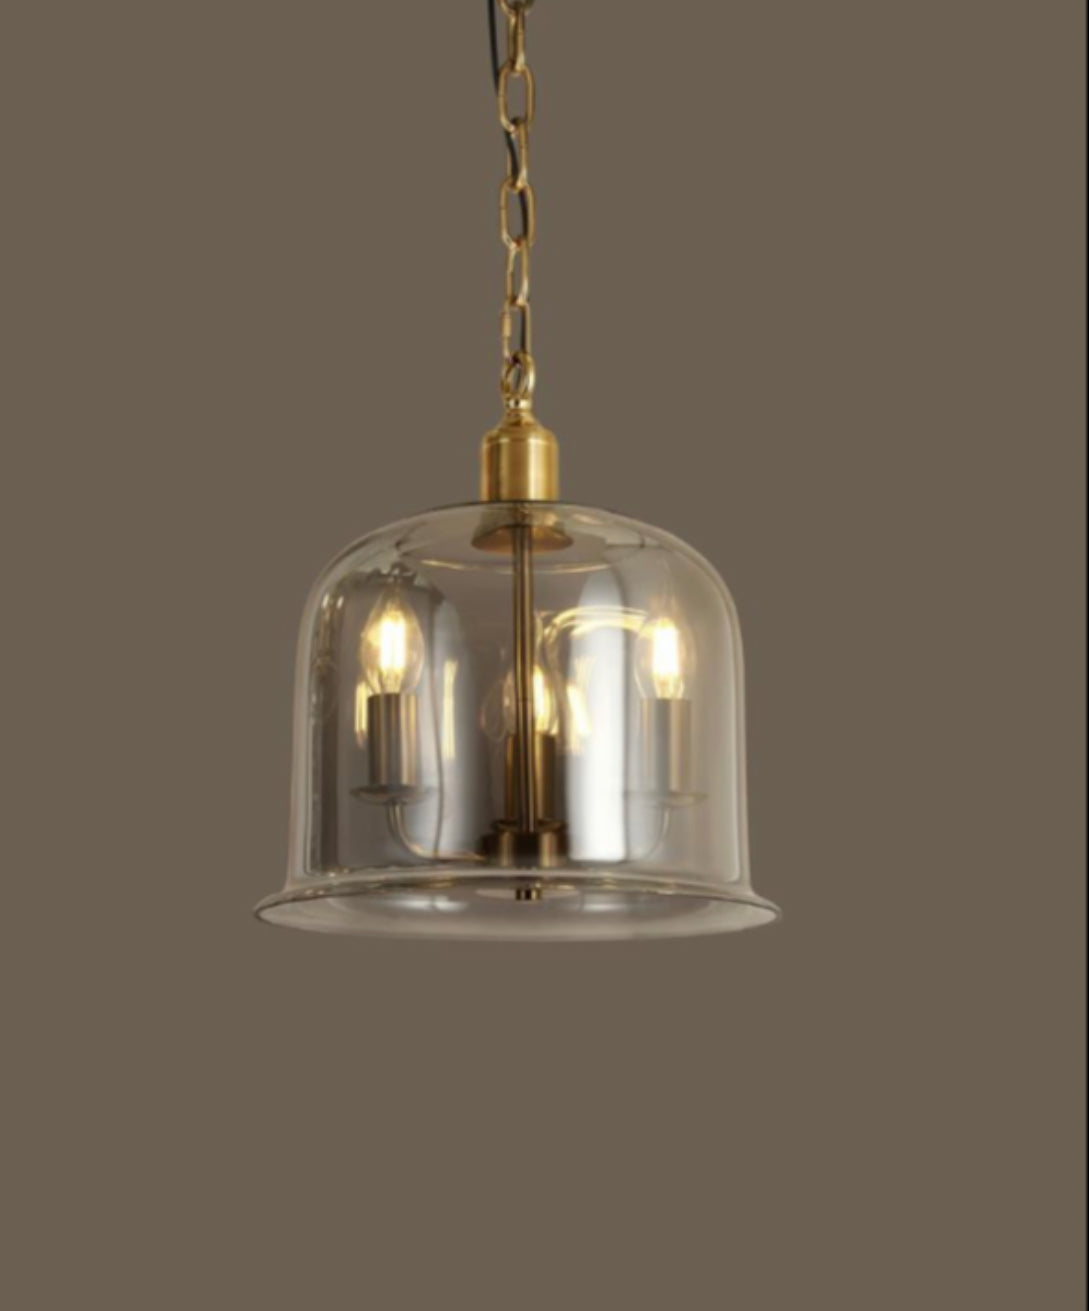 Hdc 3 Light Pendant Lighting Classic Mason Jar Amber/Smoke Glass Hanging Ceiling Light